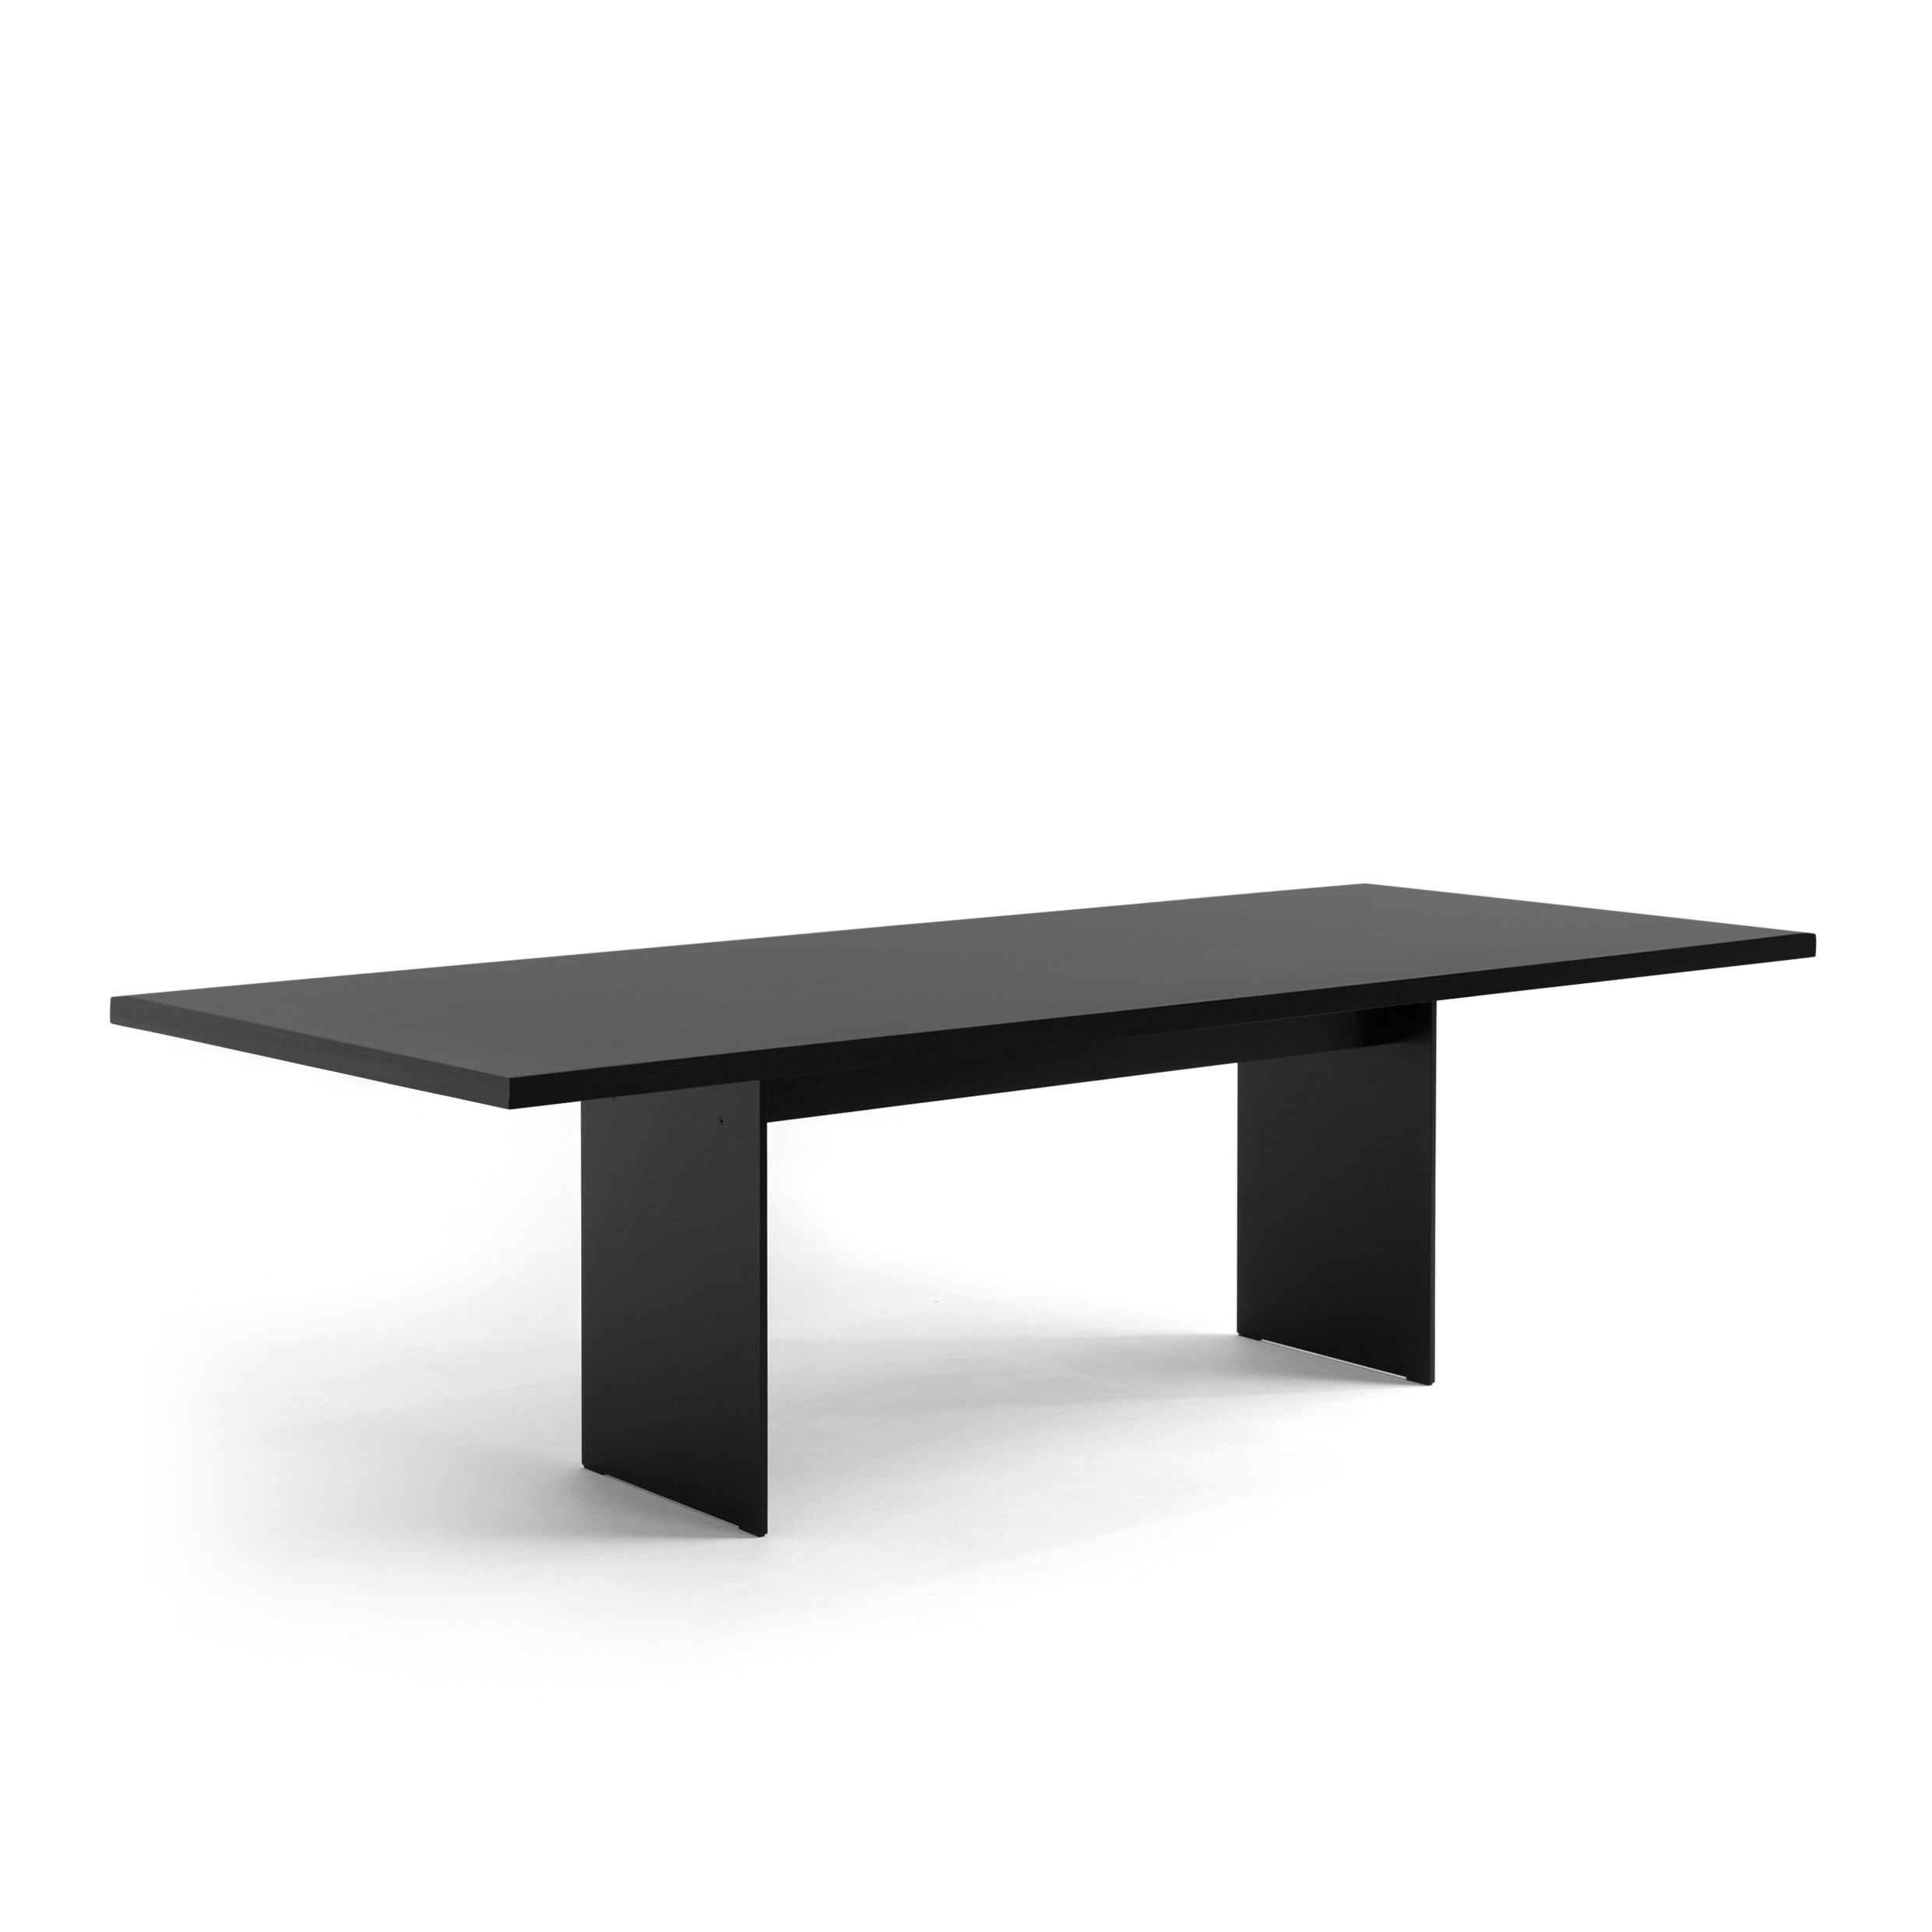 FORM EXCLUSIVE // KUNO - TABLE | FENIX | BLACK - SLEEK BLACK - BLACK - 260CM X 100CM X 4CM